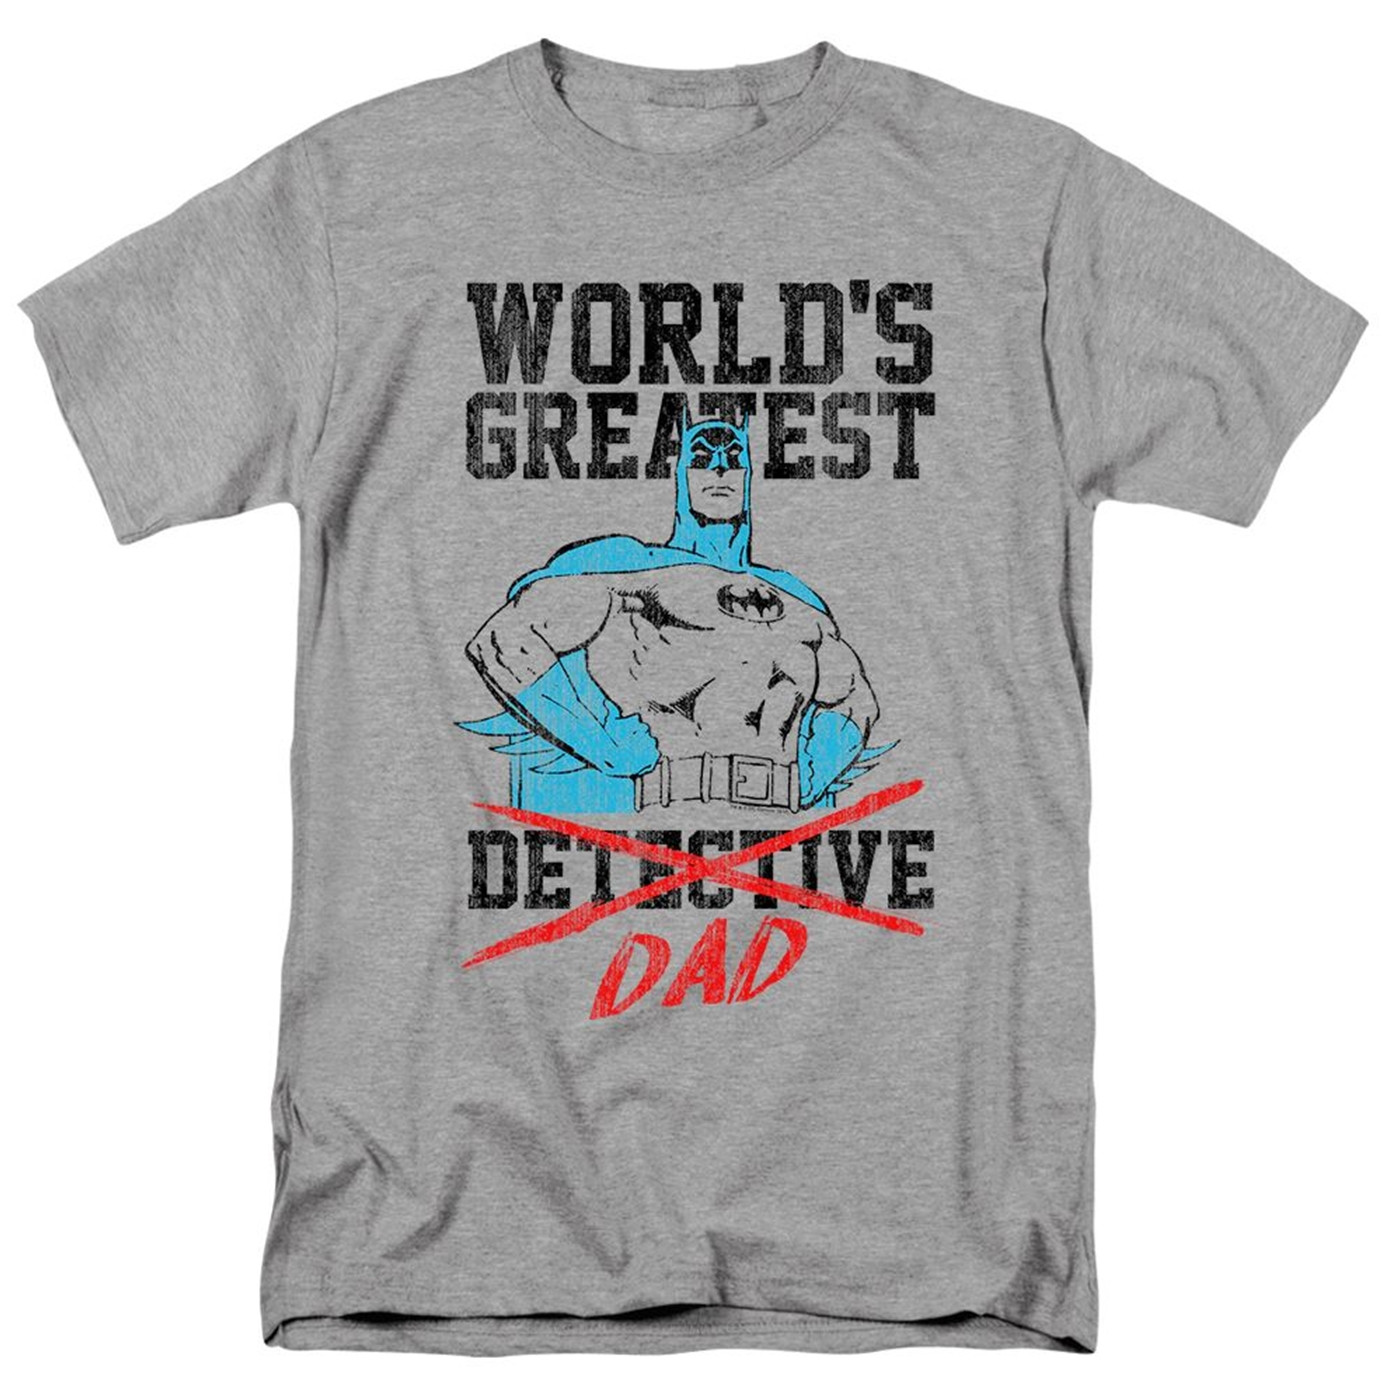 World's Greatest Dad Batman Men's T-Shirt